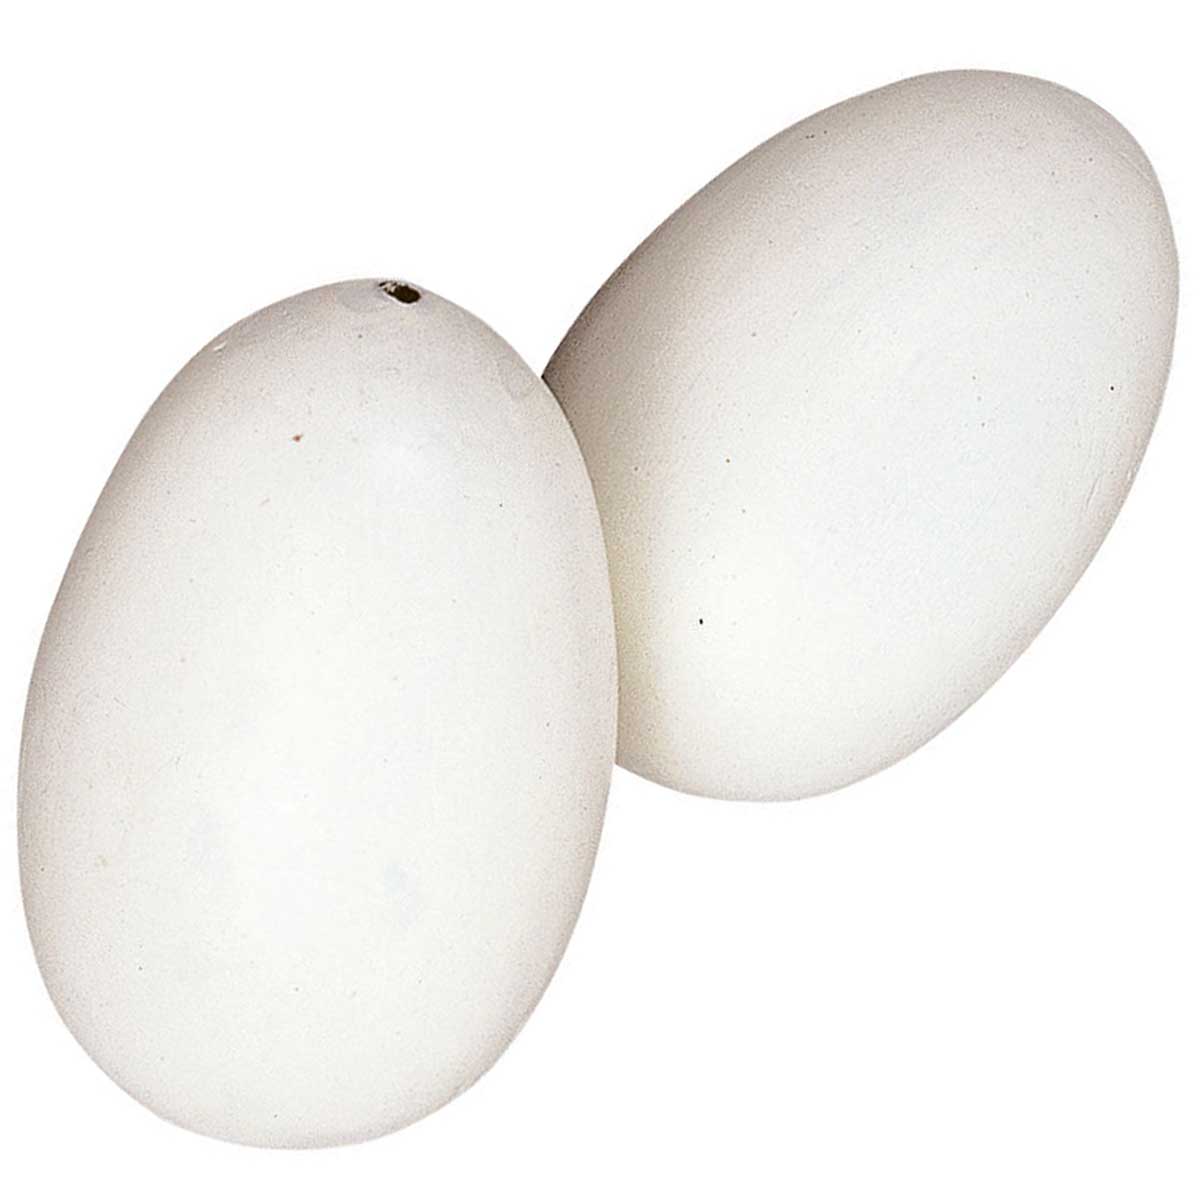 Uova finte per galline (2 pz.)